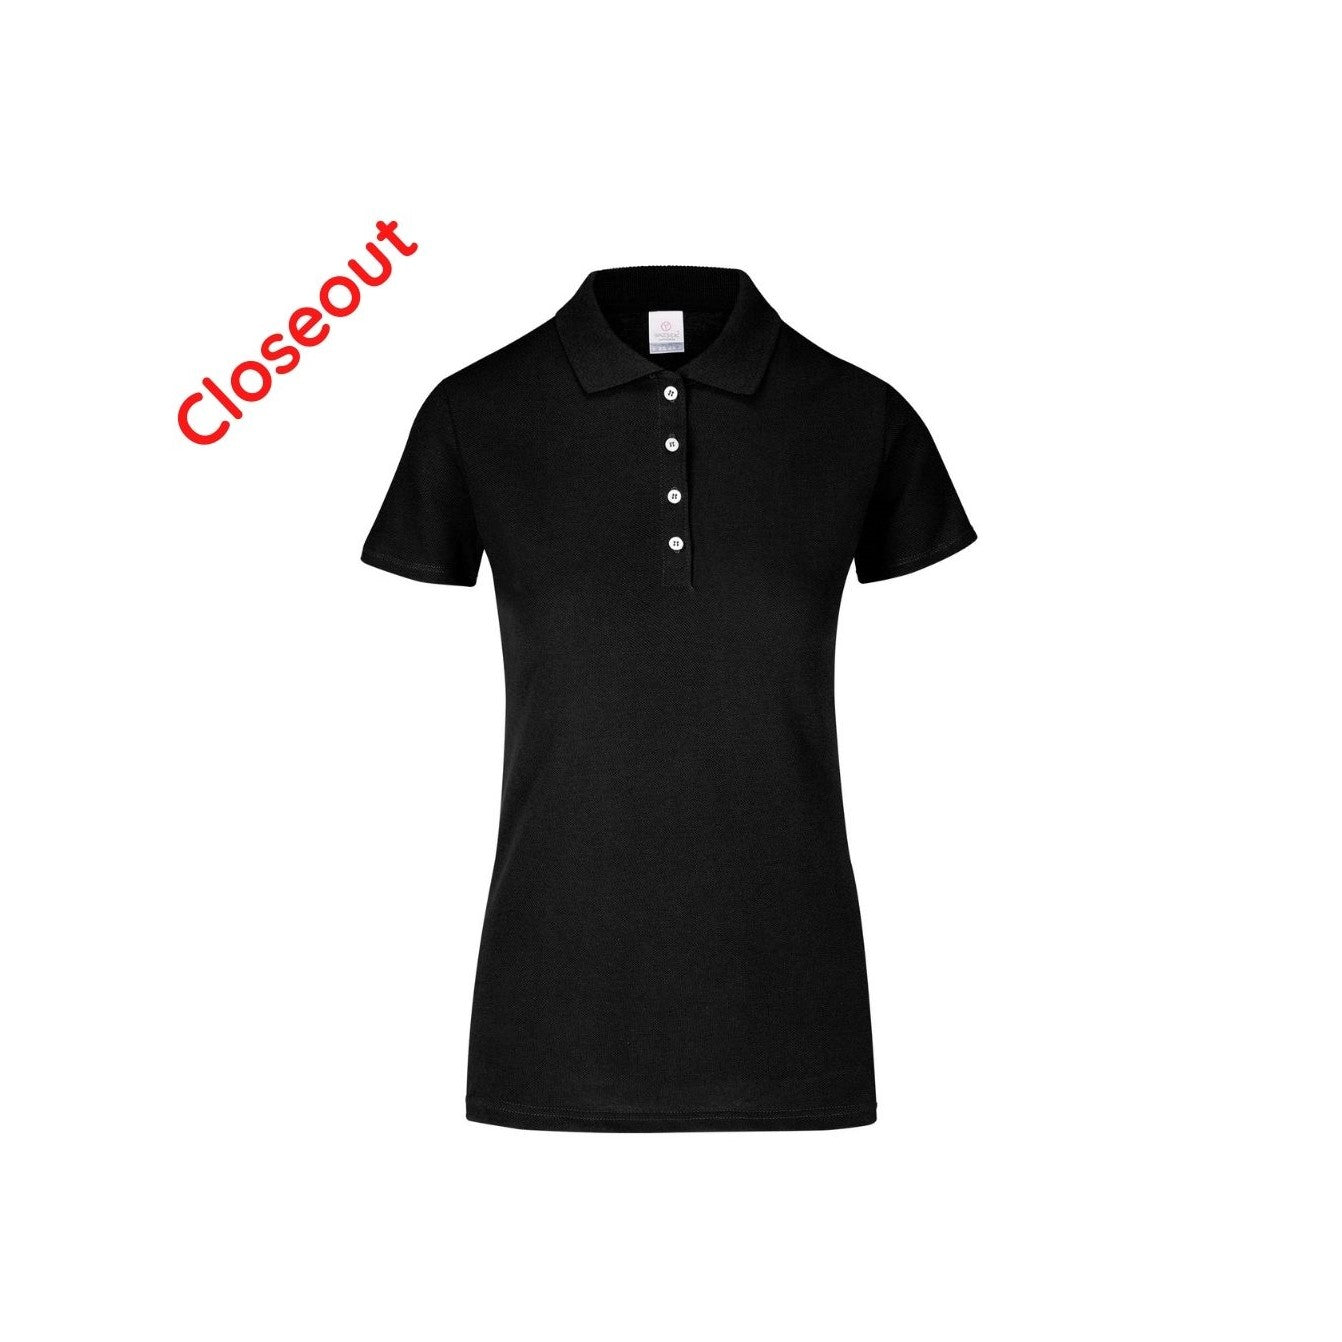 Women’s Silhouette Sport Shirt (Black)